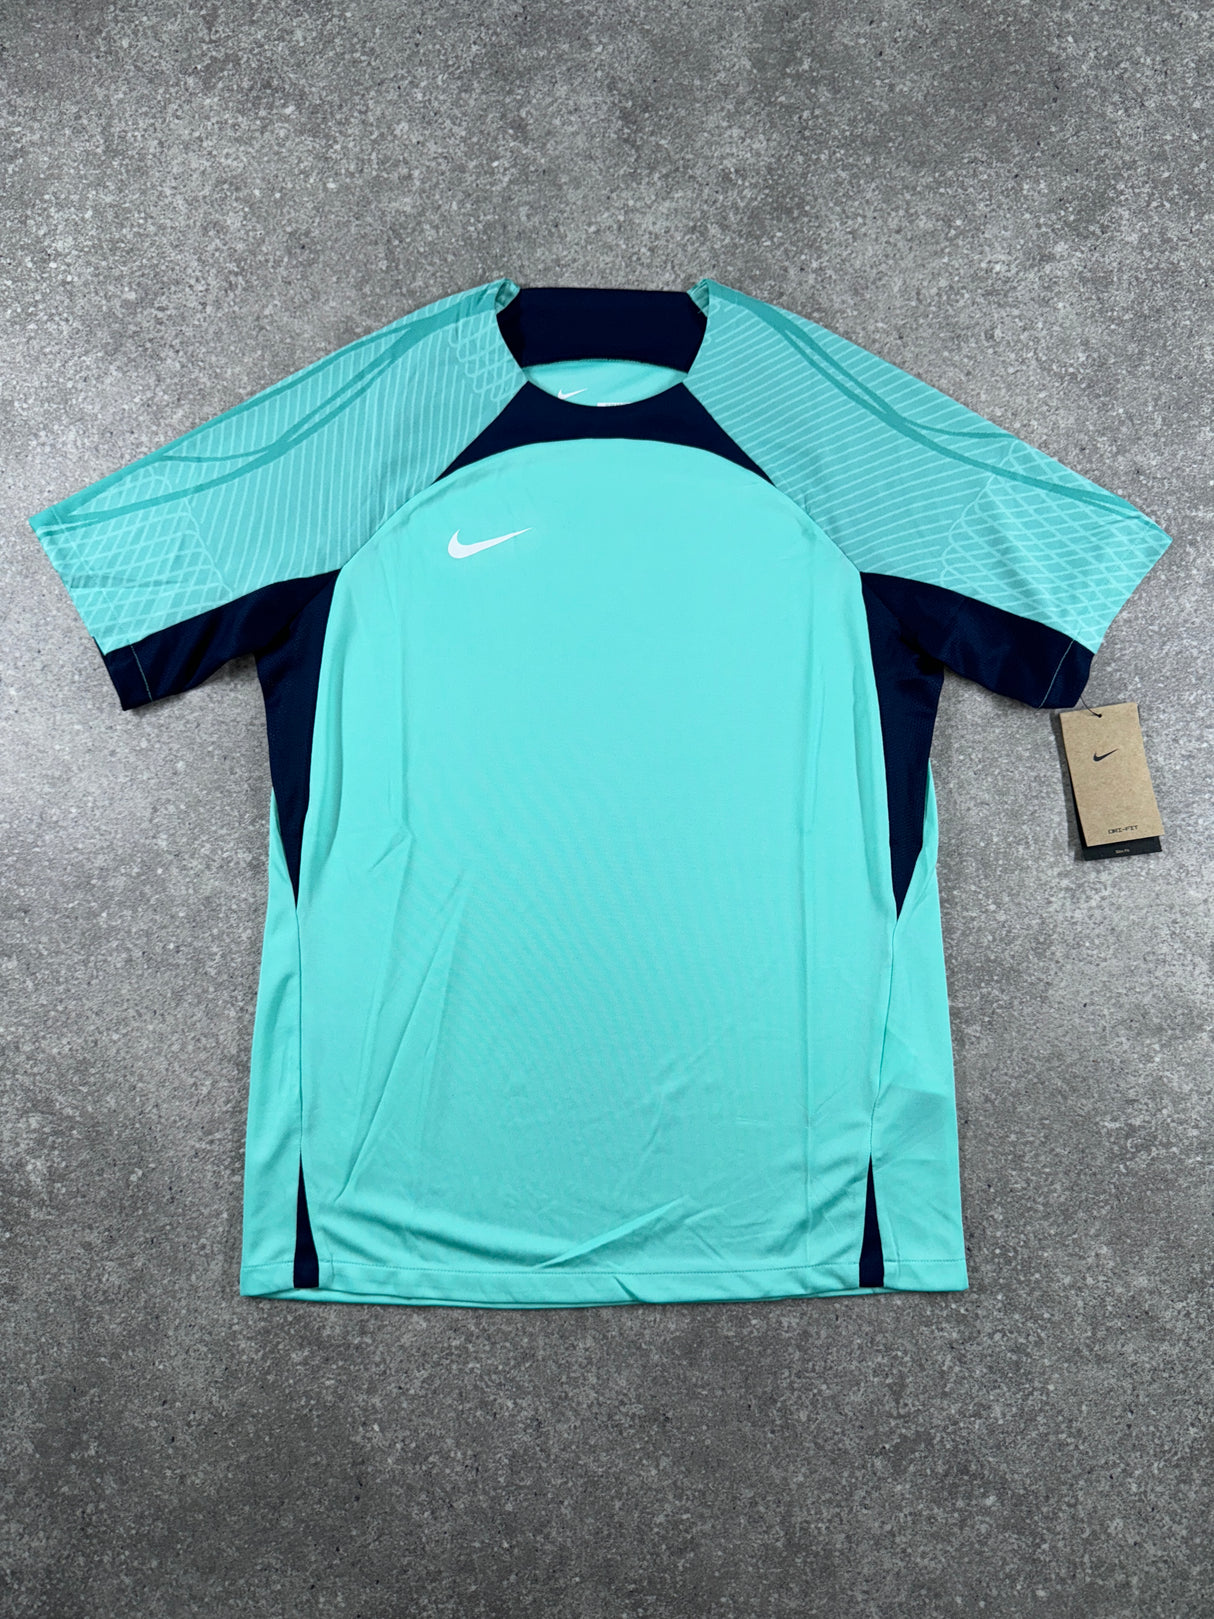 Nike - Strike T Shirt - Hyper Turquoise